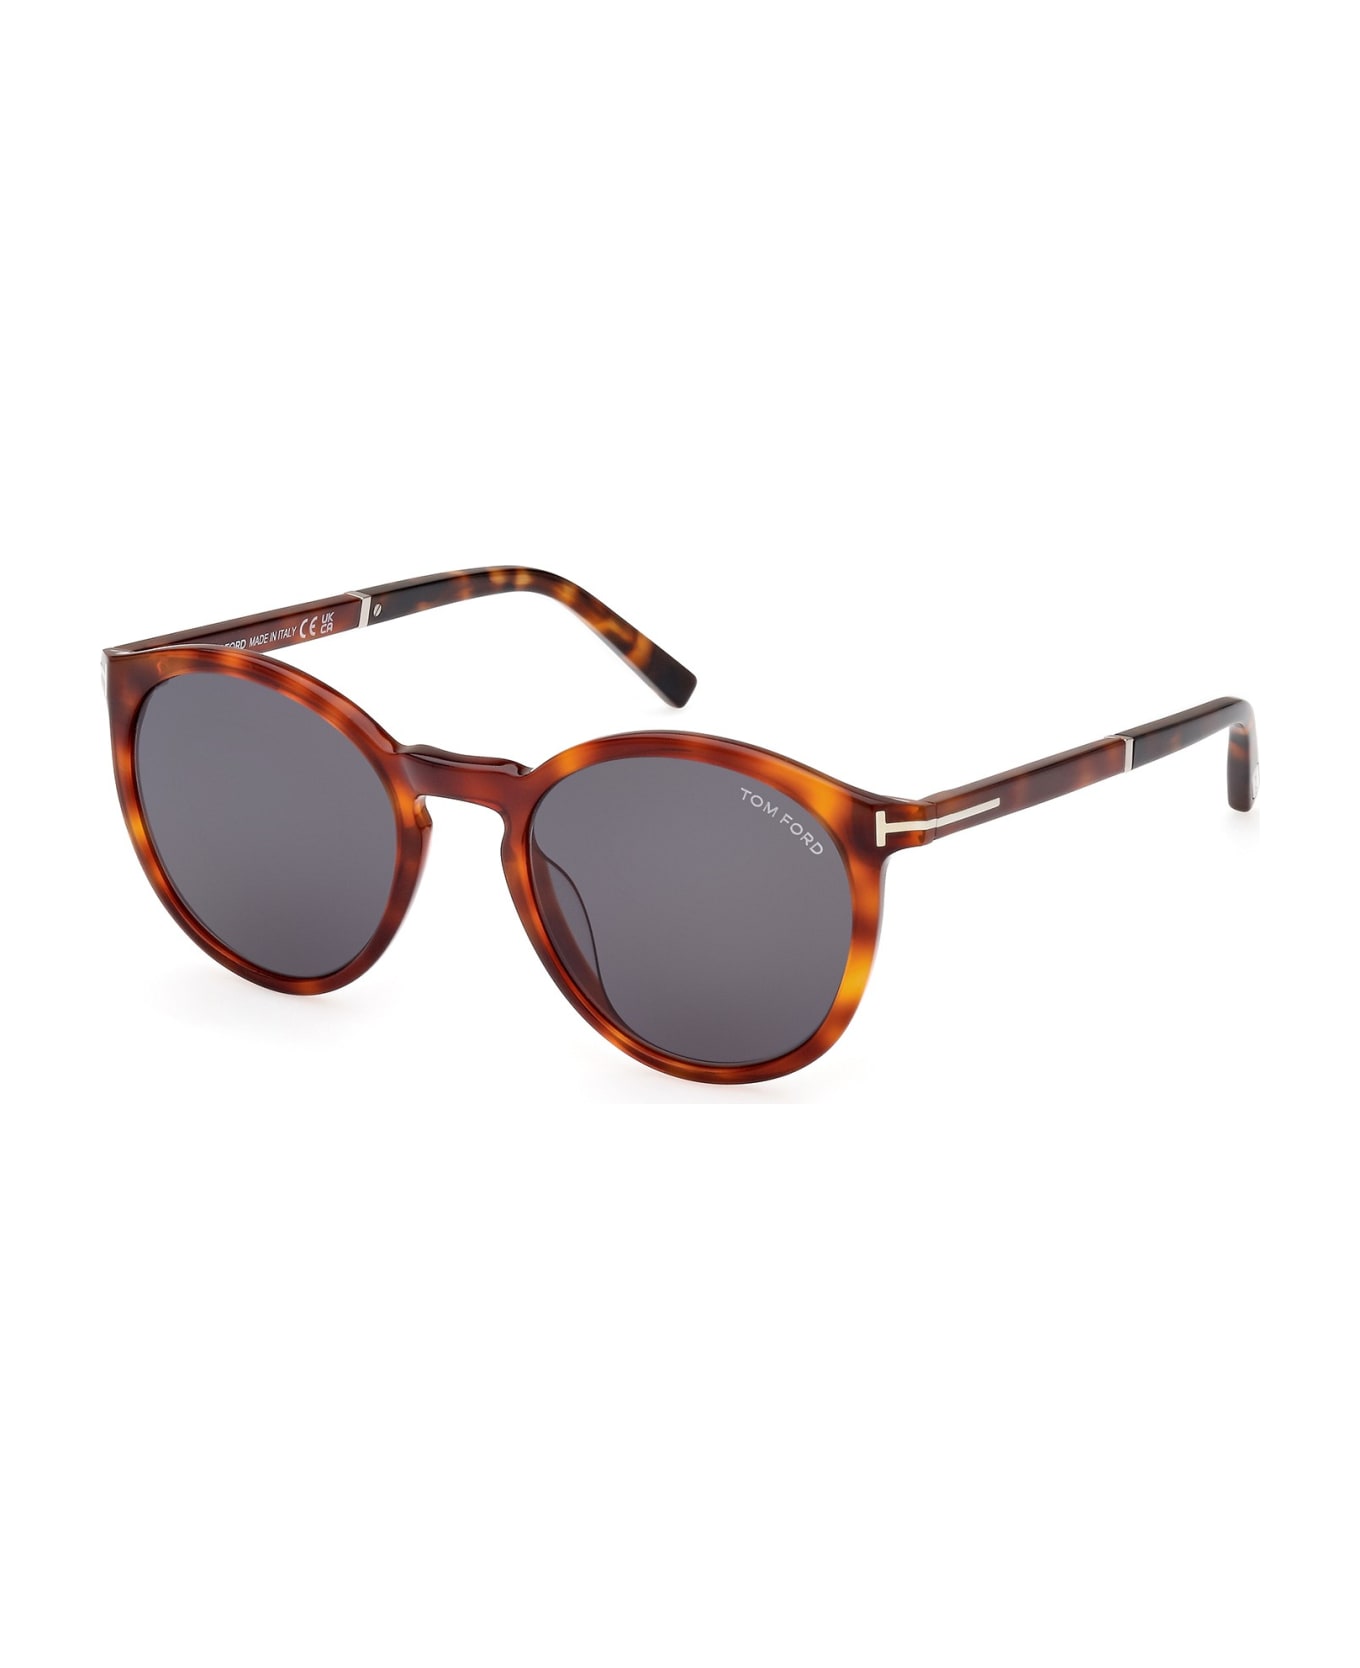 Tom Ford Eyewear Sunglasses - Marrone/Marrone サングラス